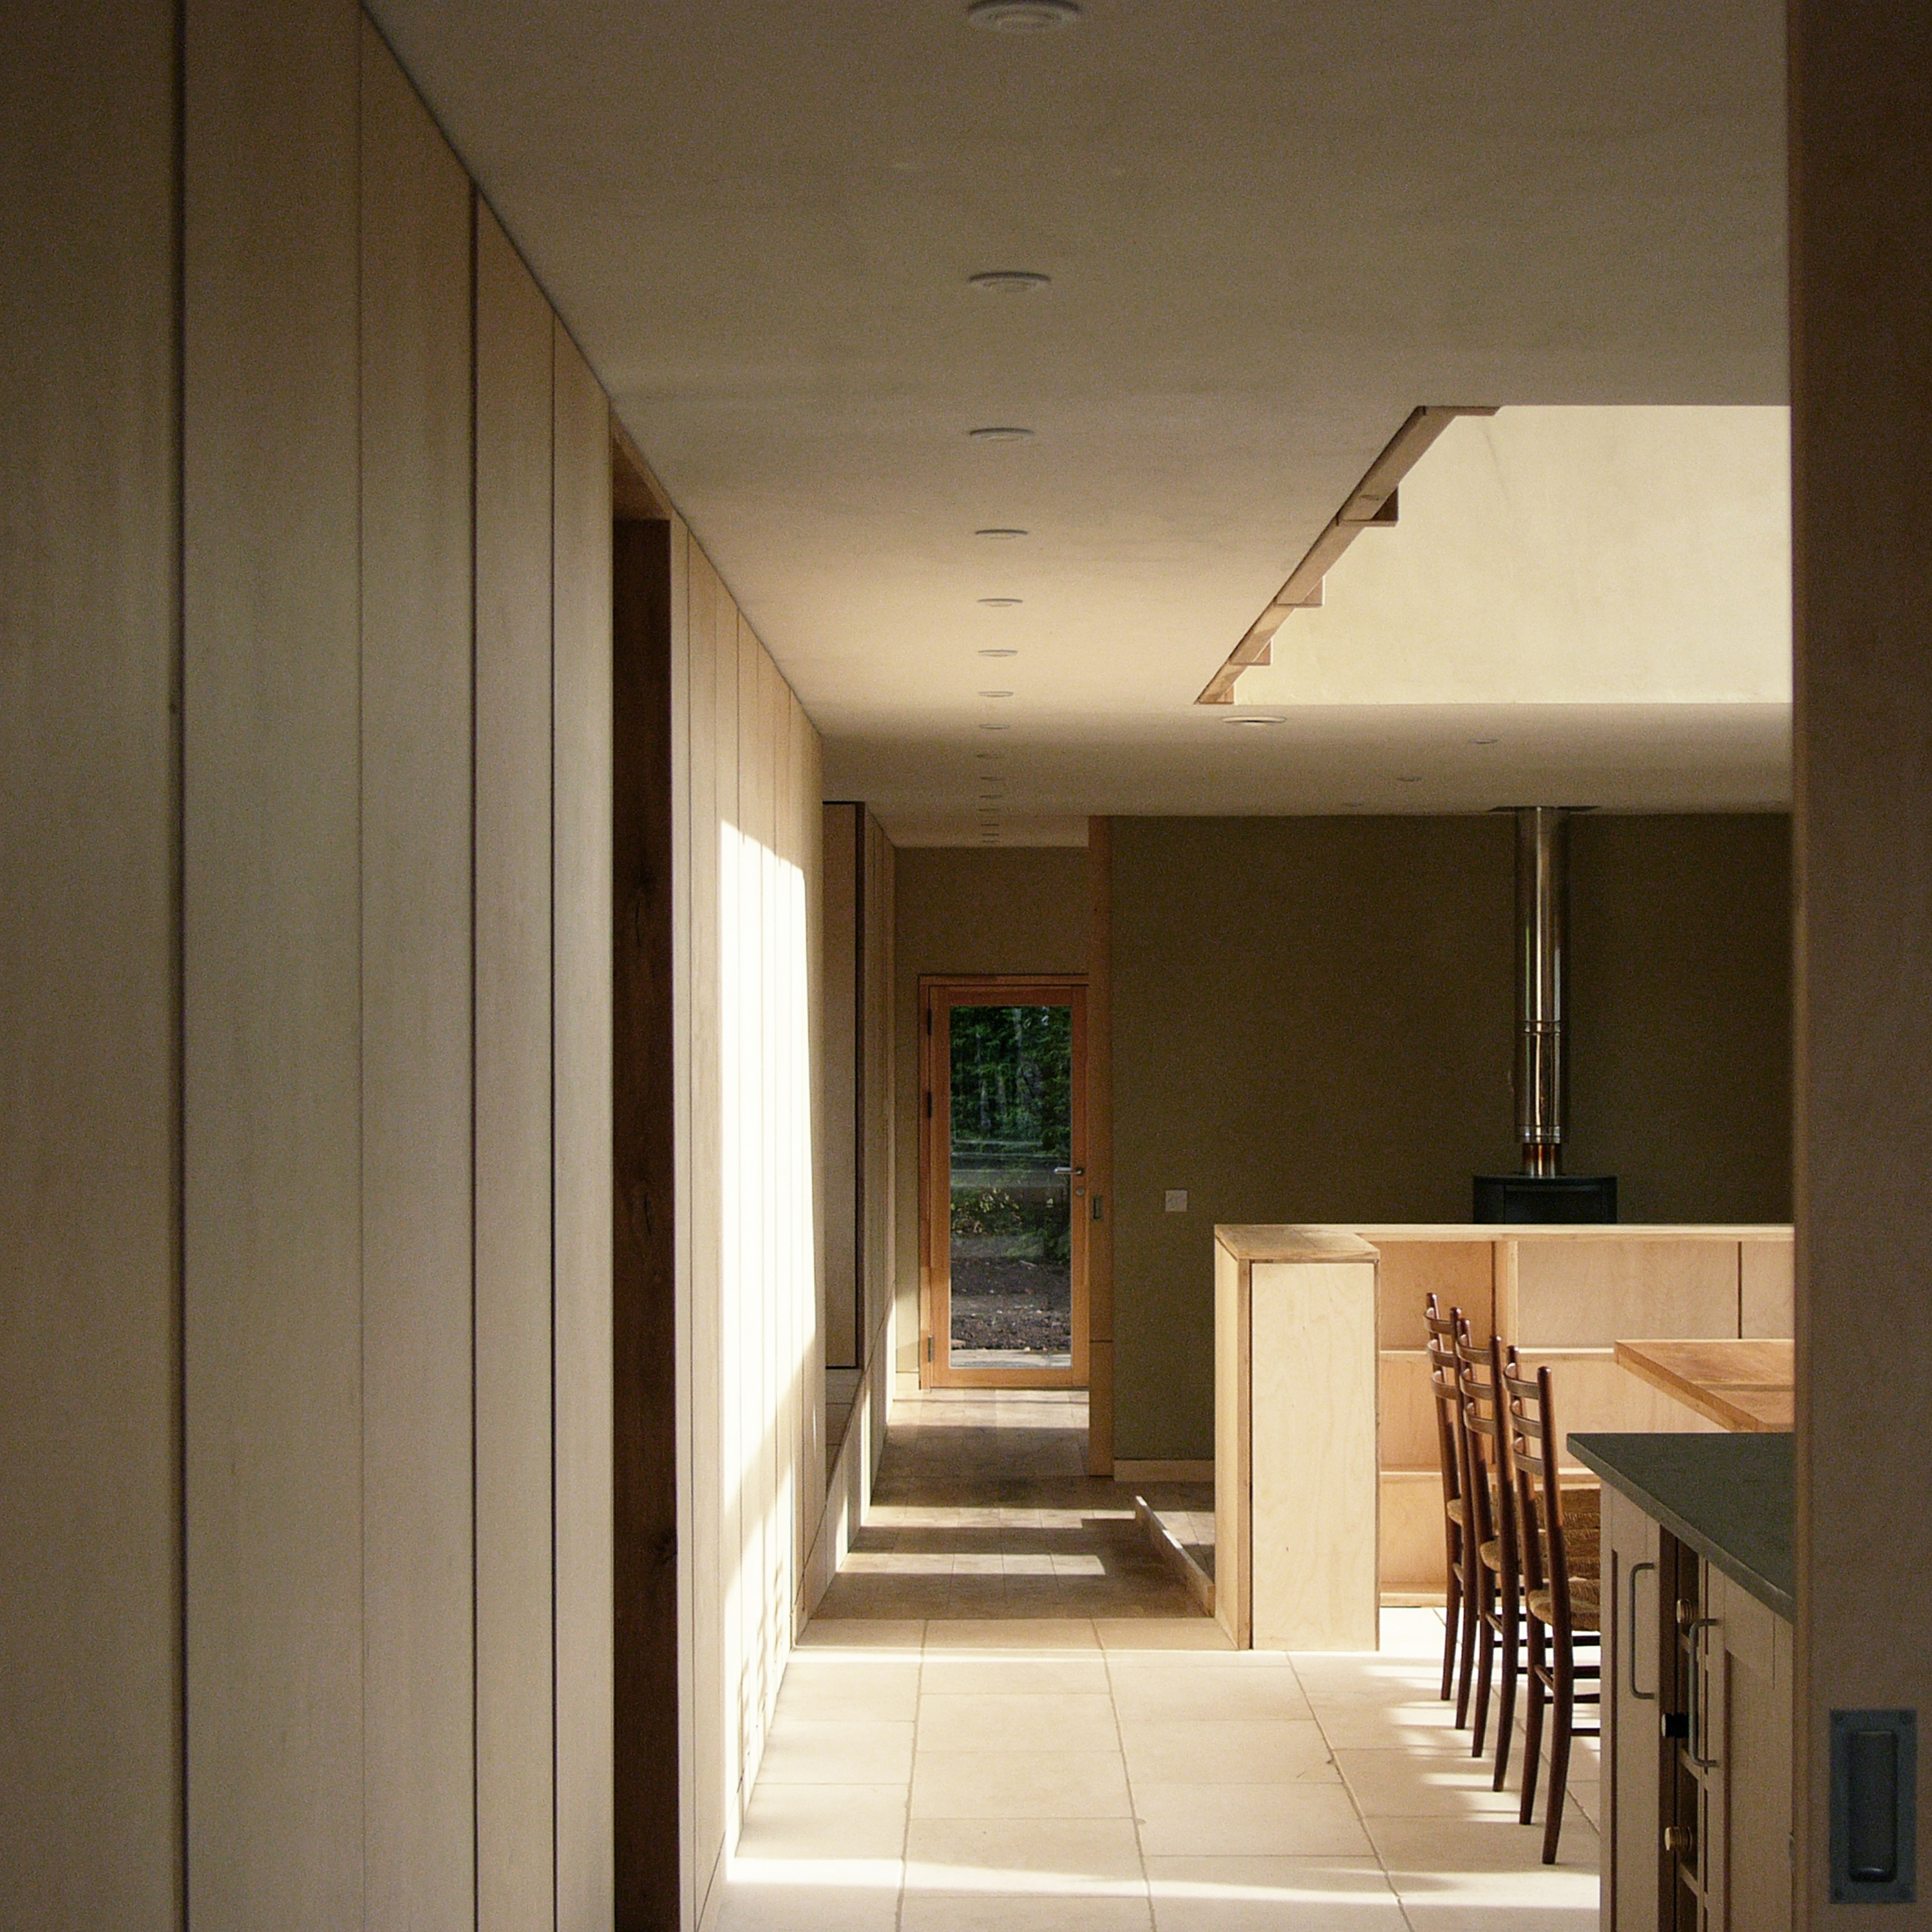 Interior - Hall leading to kitchen (c) Edmund fowles